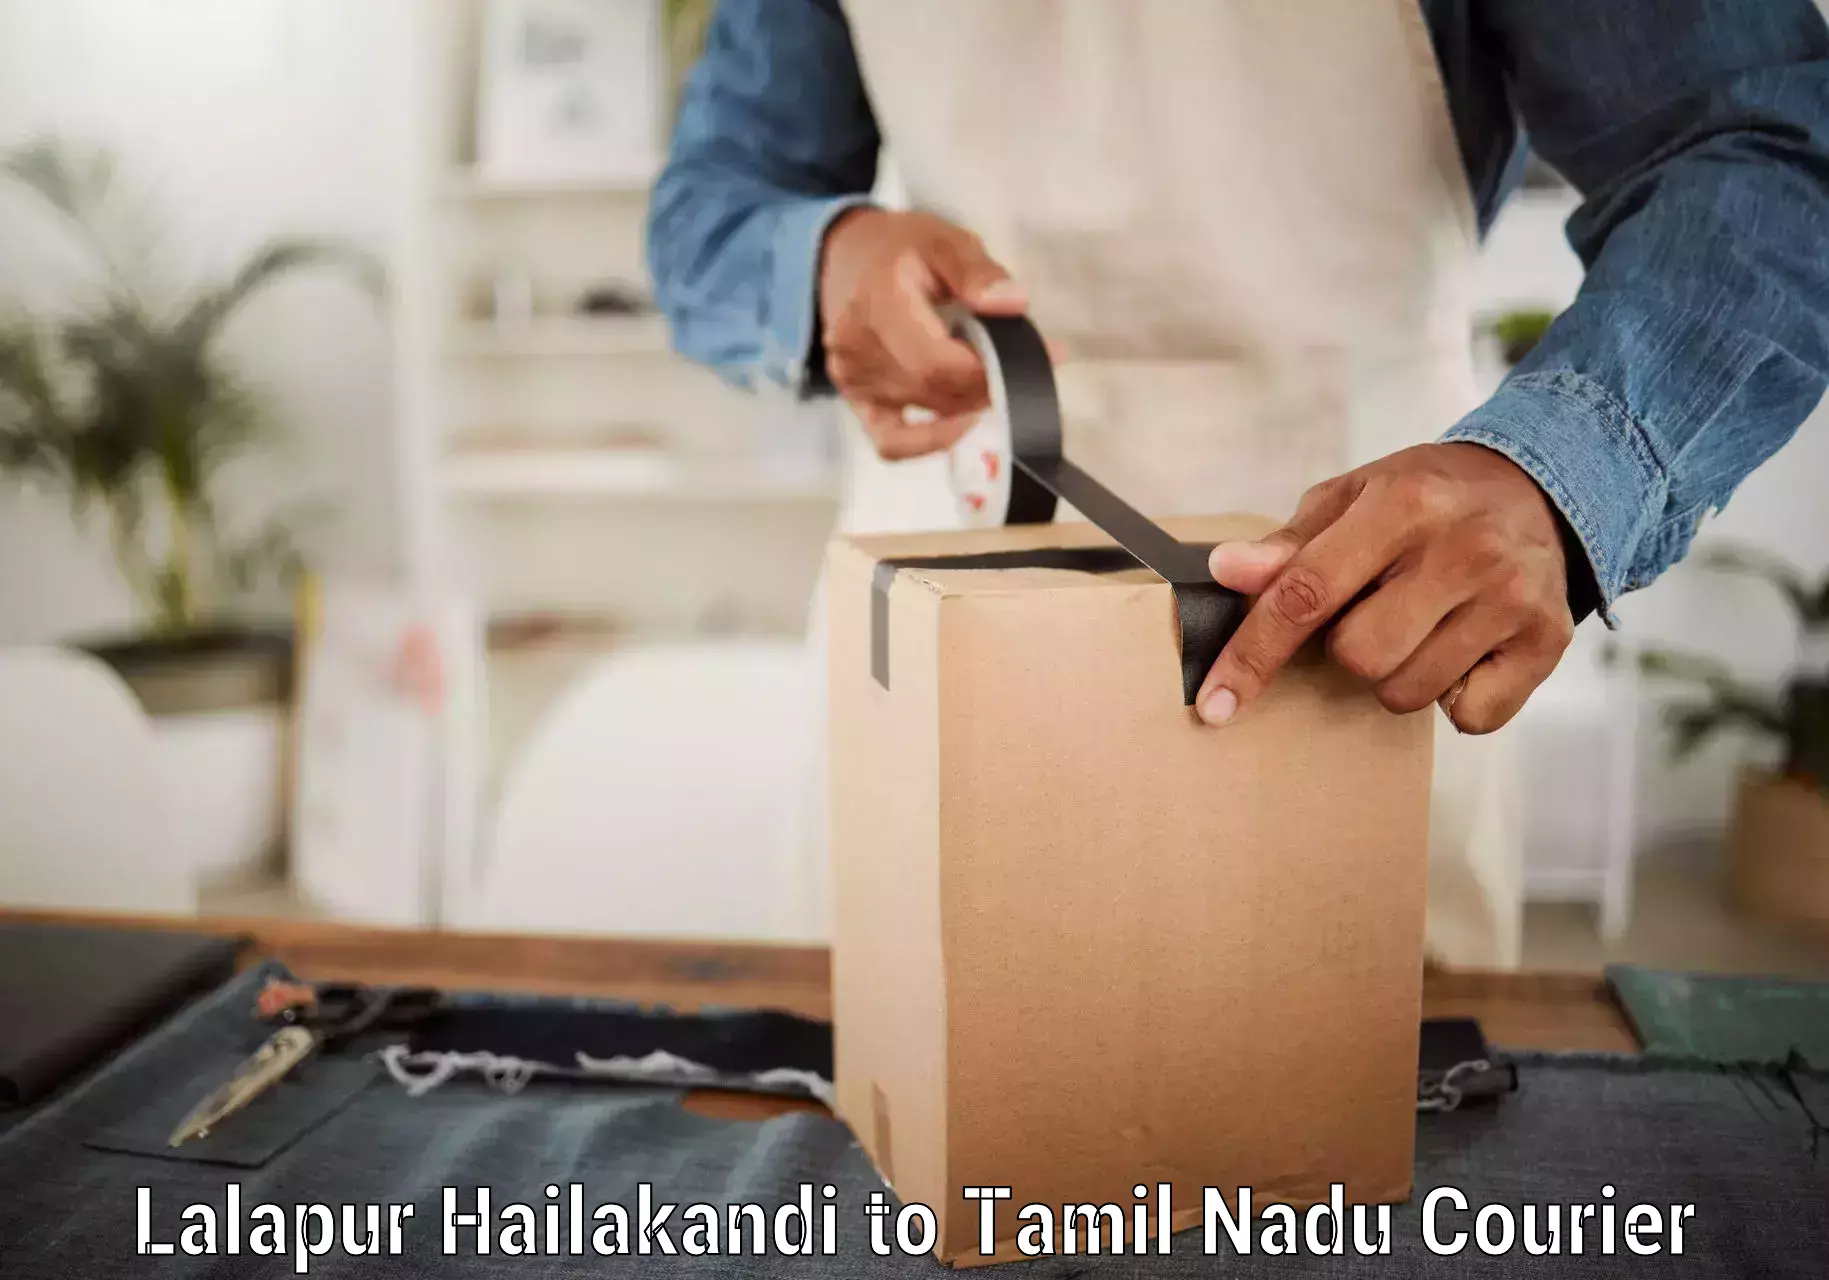 Cash on delivery service Lalapur Hailakandi to Thiruvarur